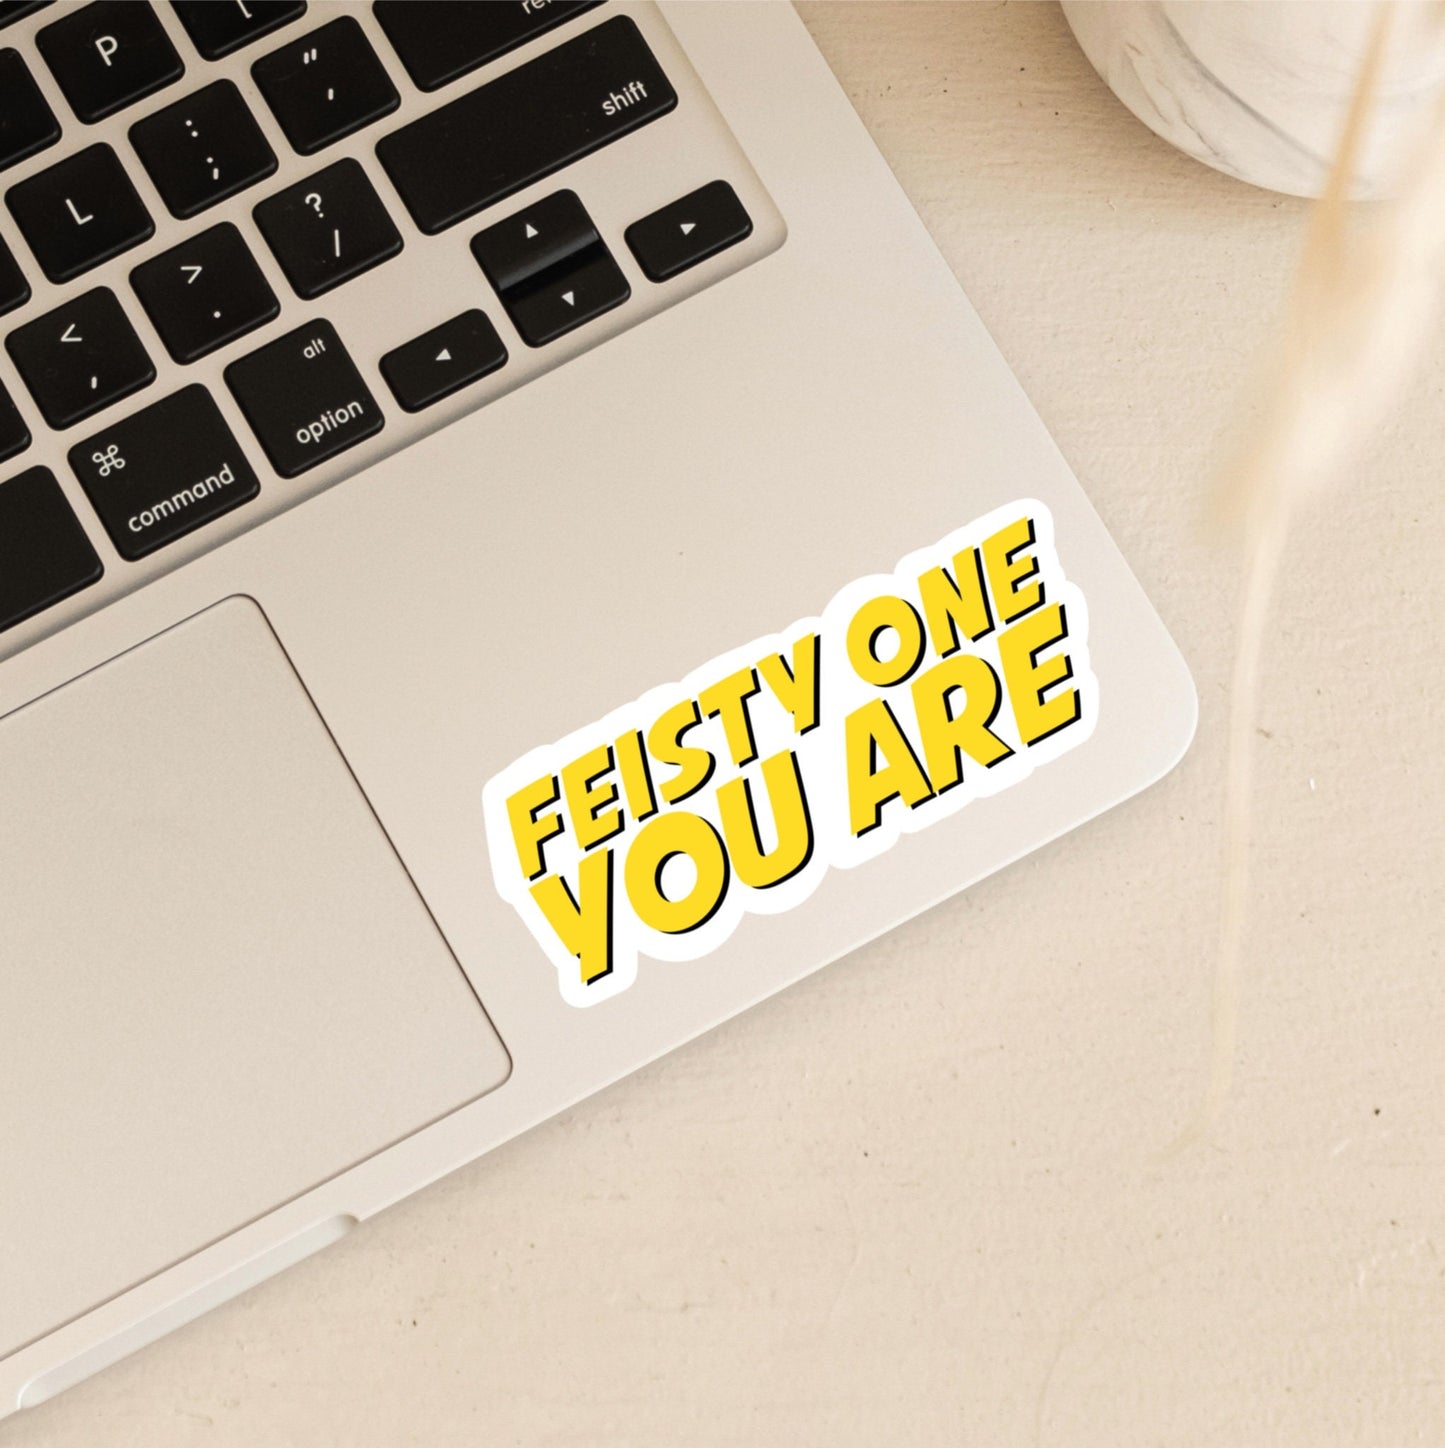 Feisty One, You Are! | Will Inbetweeners | Inbetweeners Stickers | UK Stickers